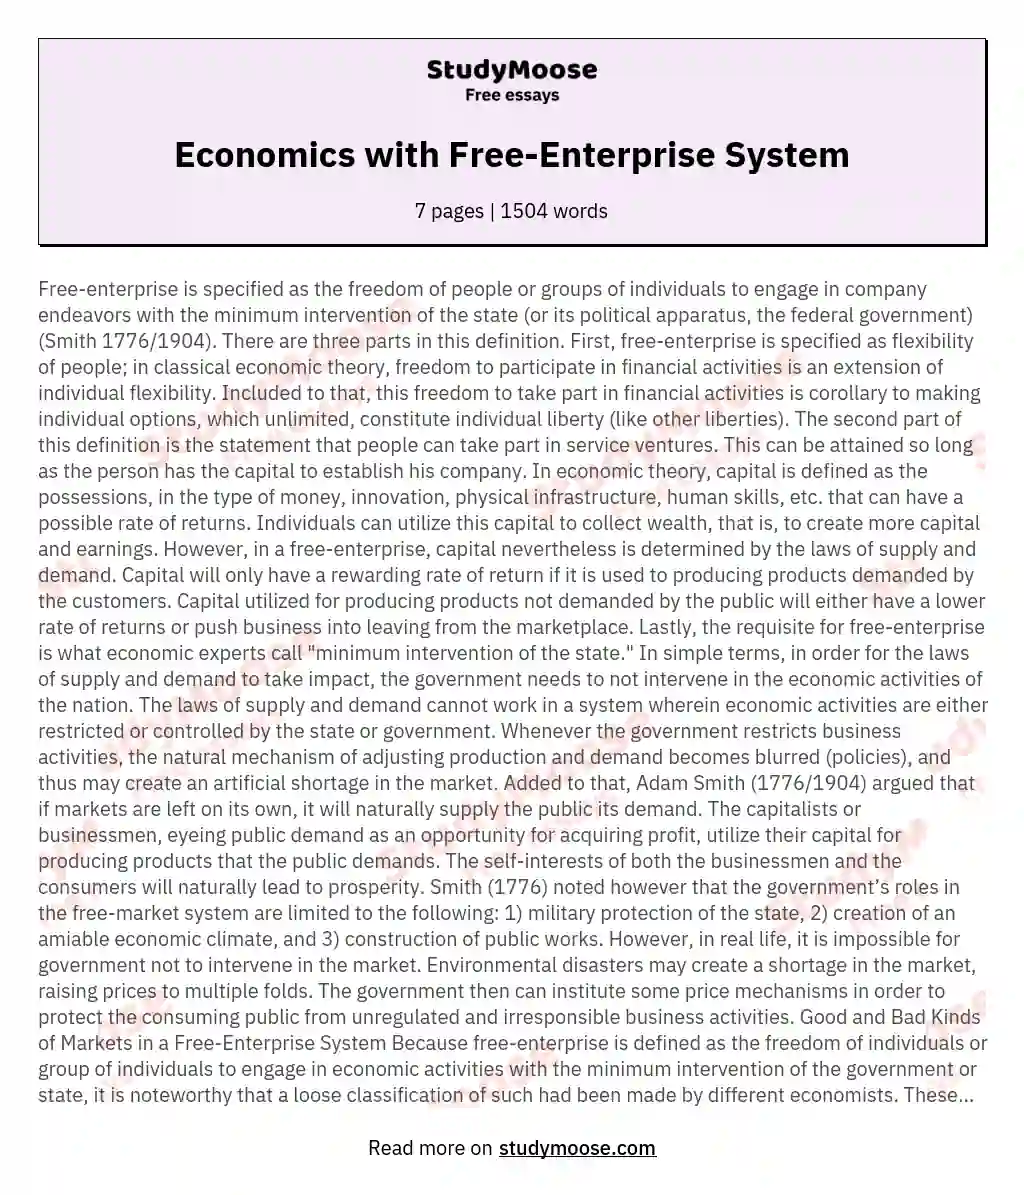 Economics with Free-Enterprise System essay